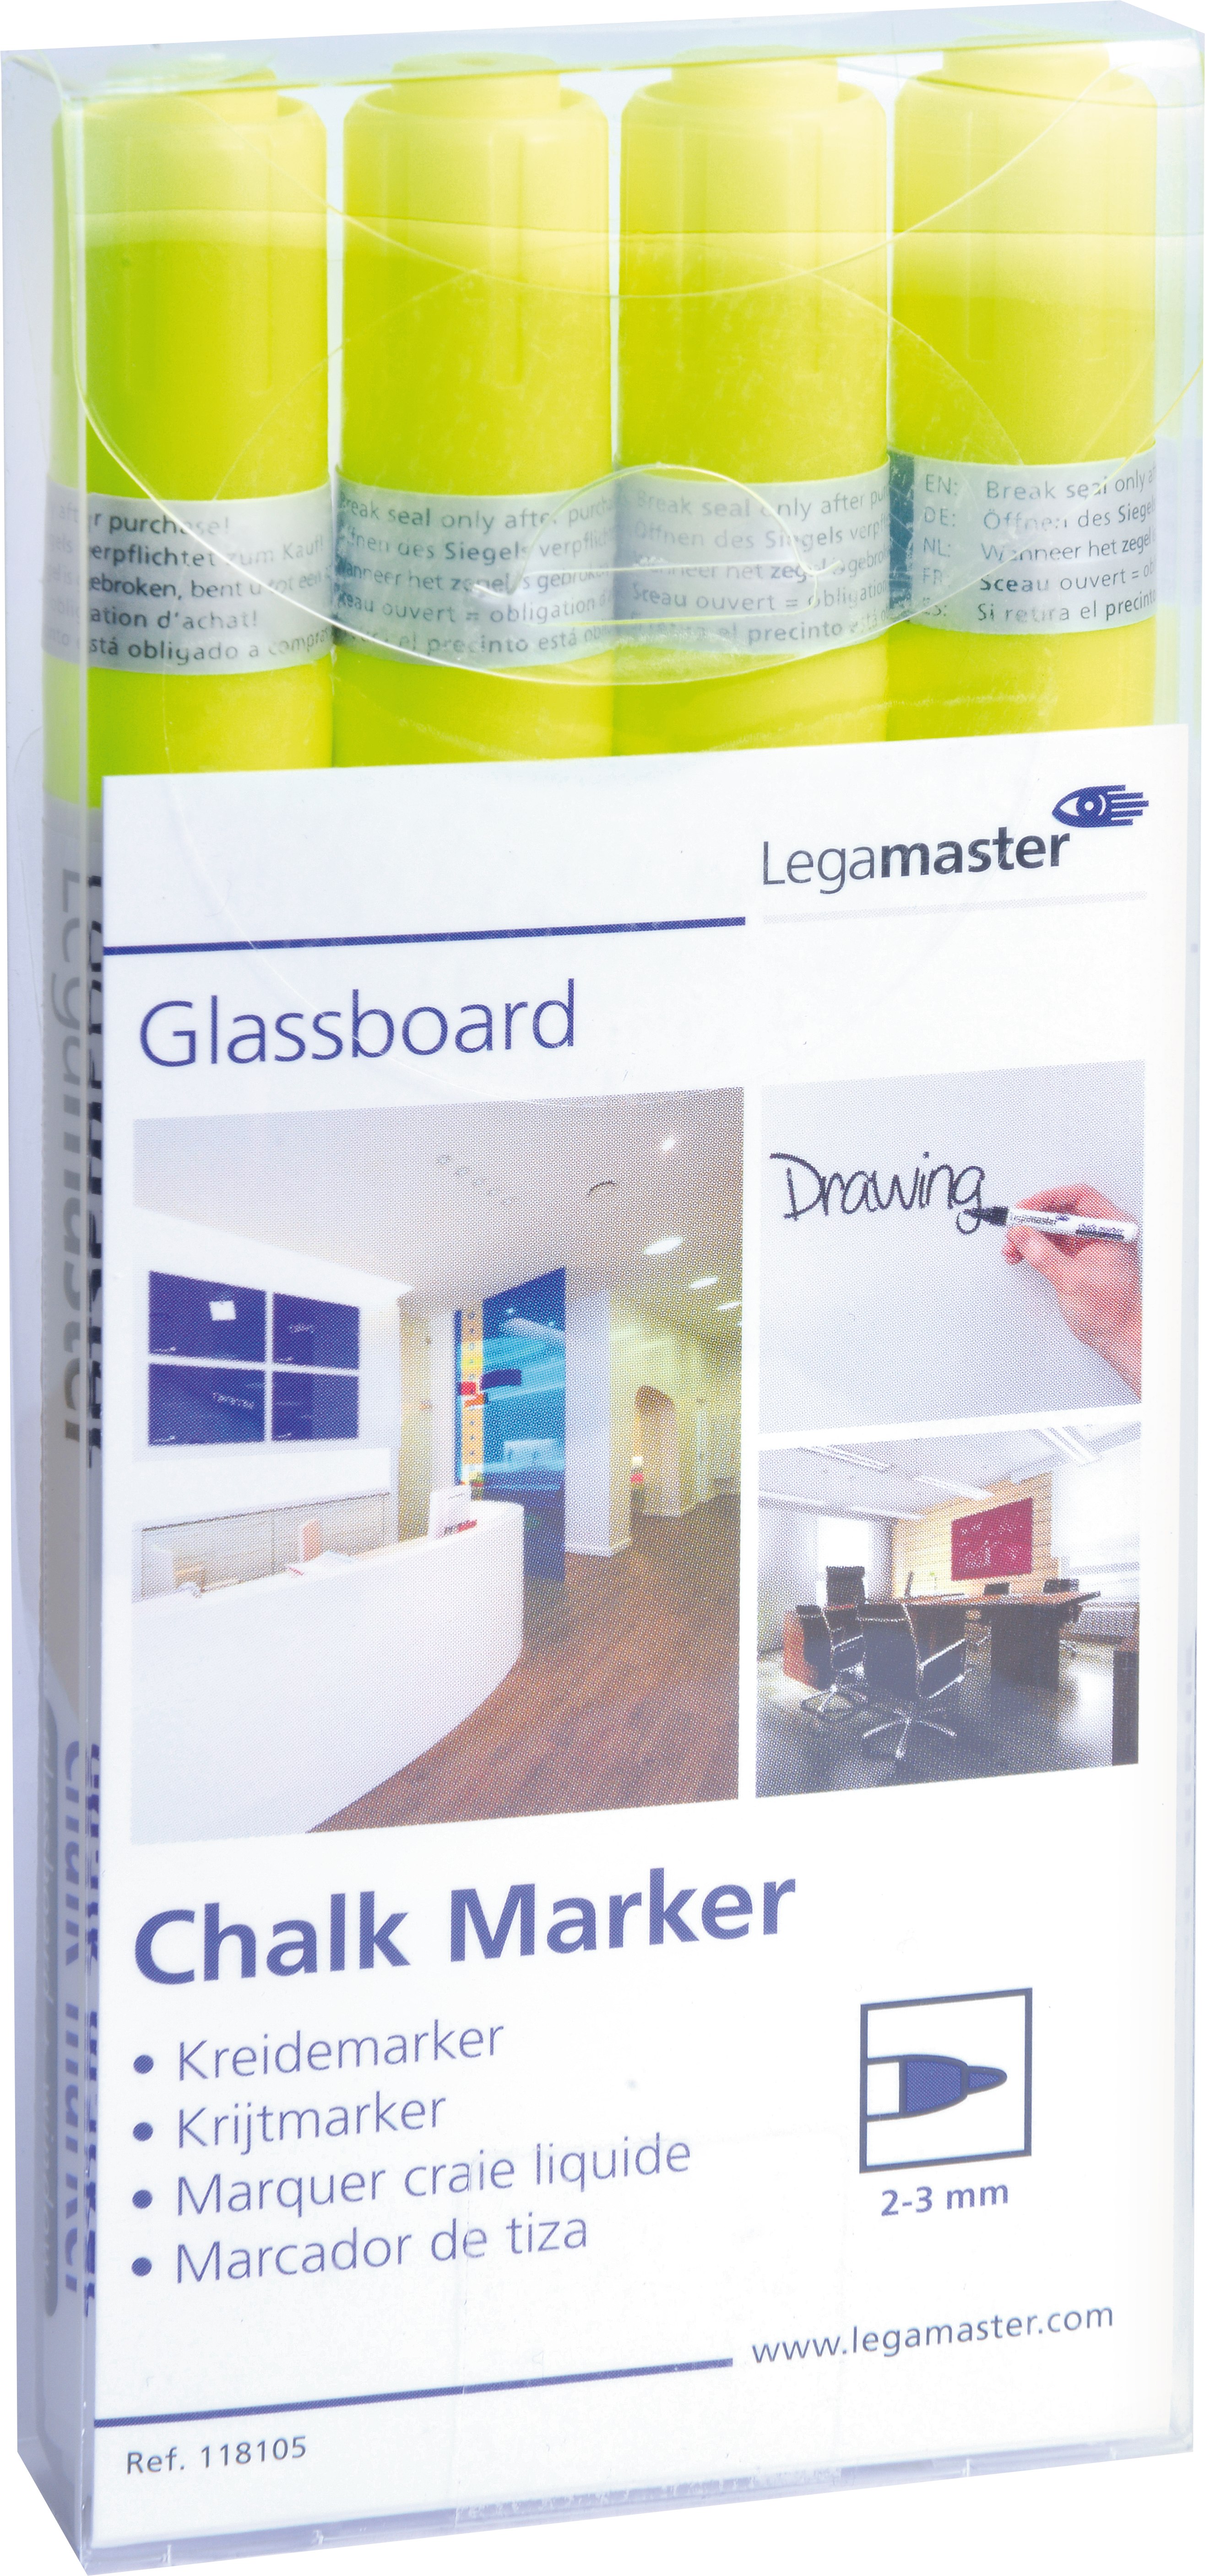 LEGAMASTER Glassboard Marker 7-118105 4 pcs. jaune